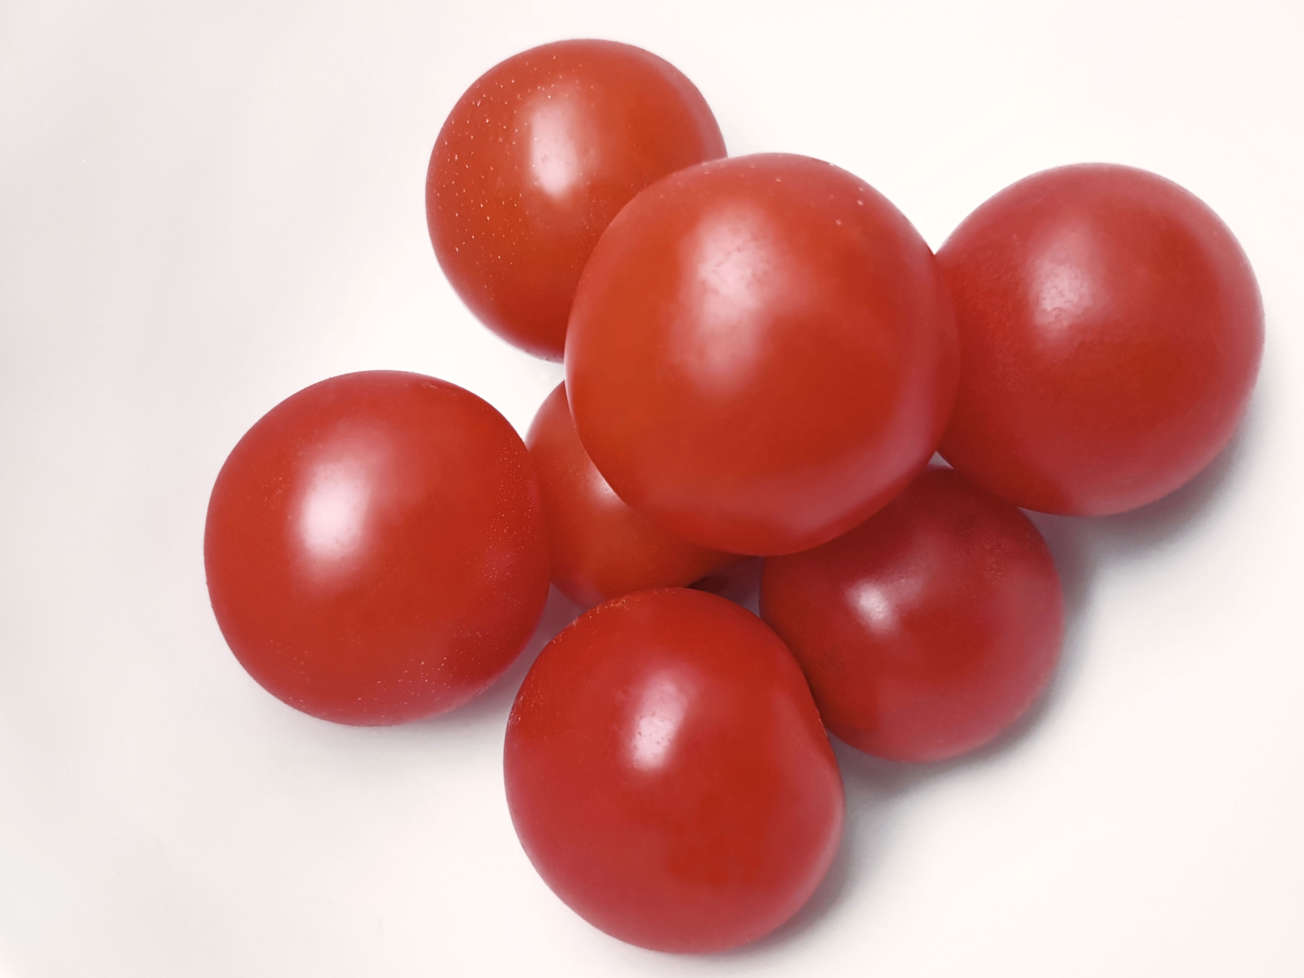 cherry paradajky